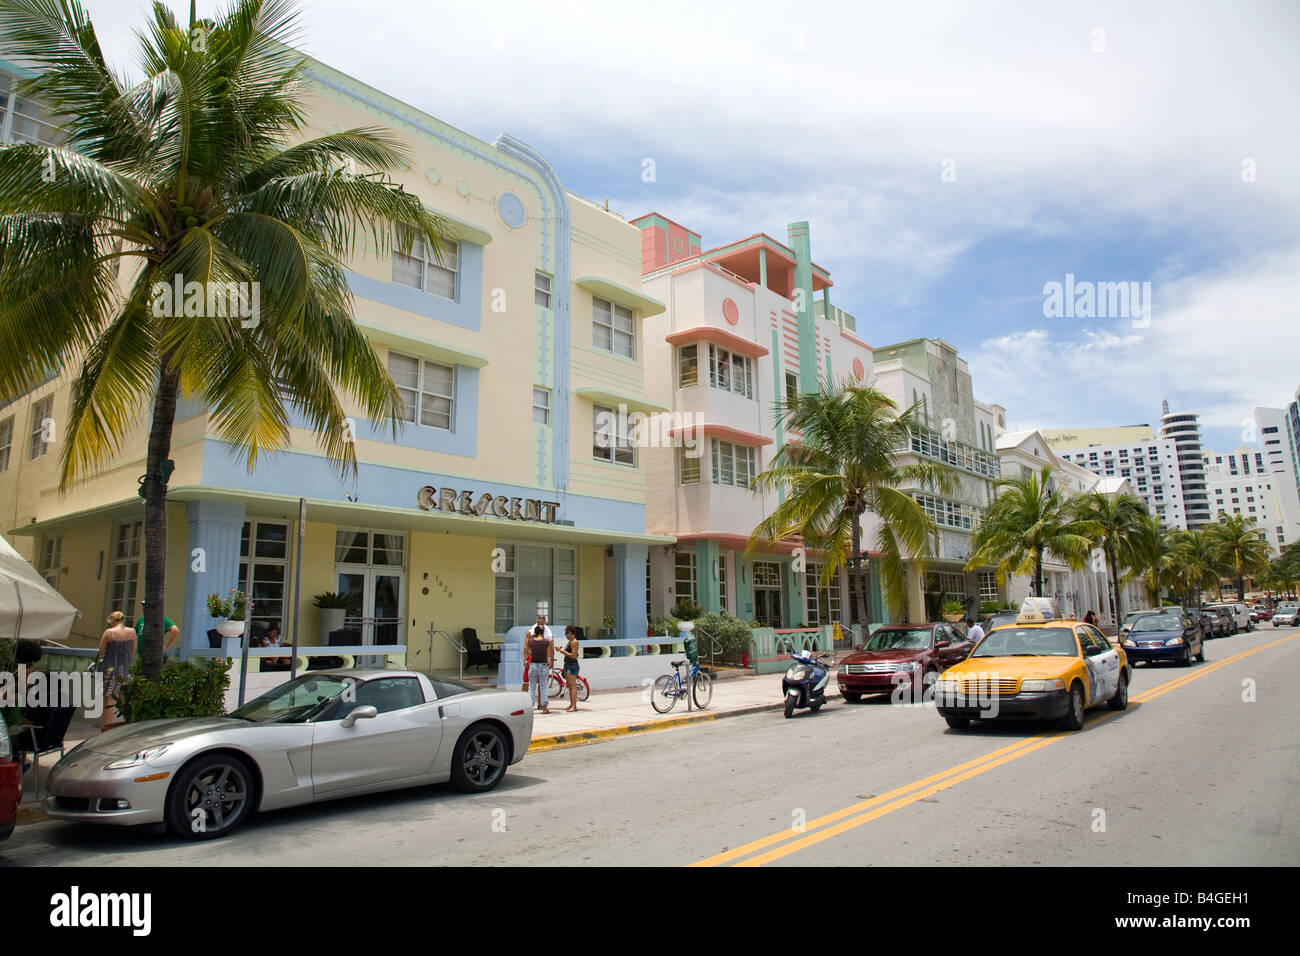 Crescent Hotel, South Beach, Miami, Florida Stock Photo